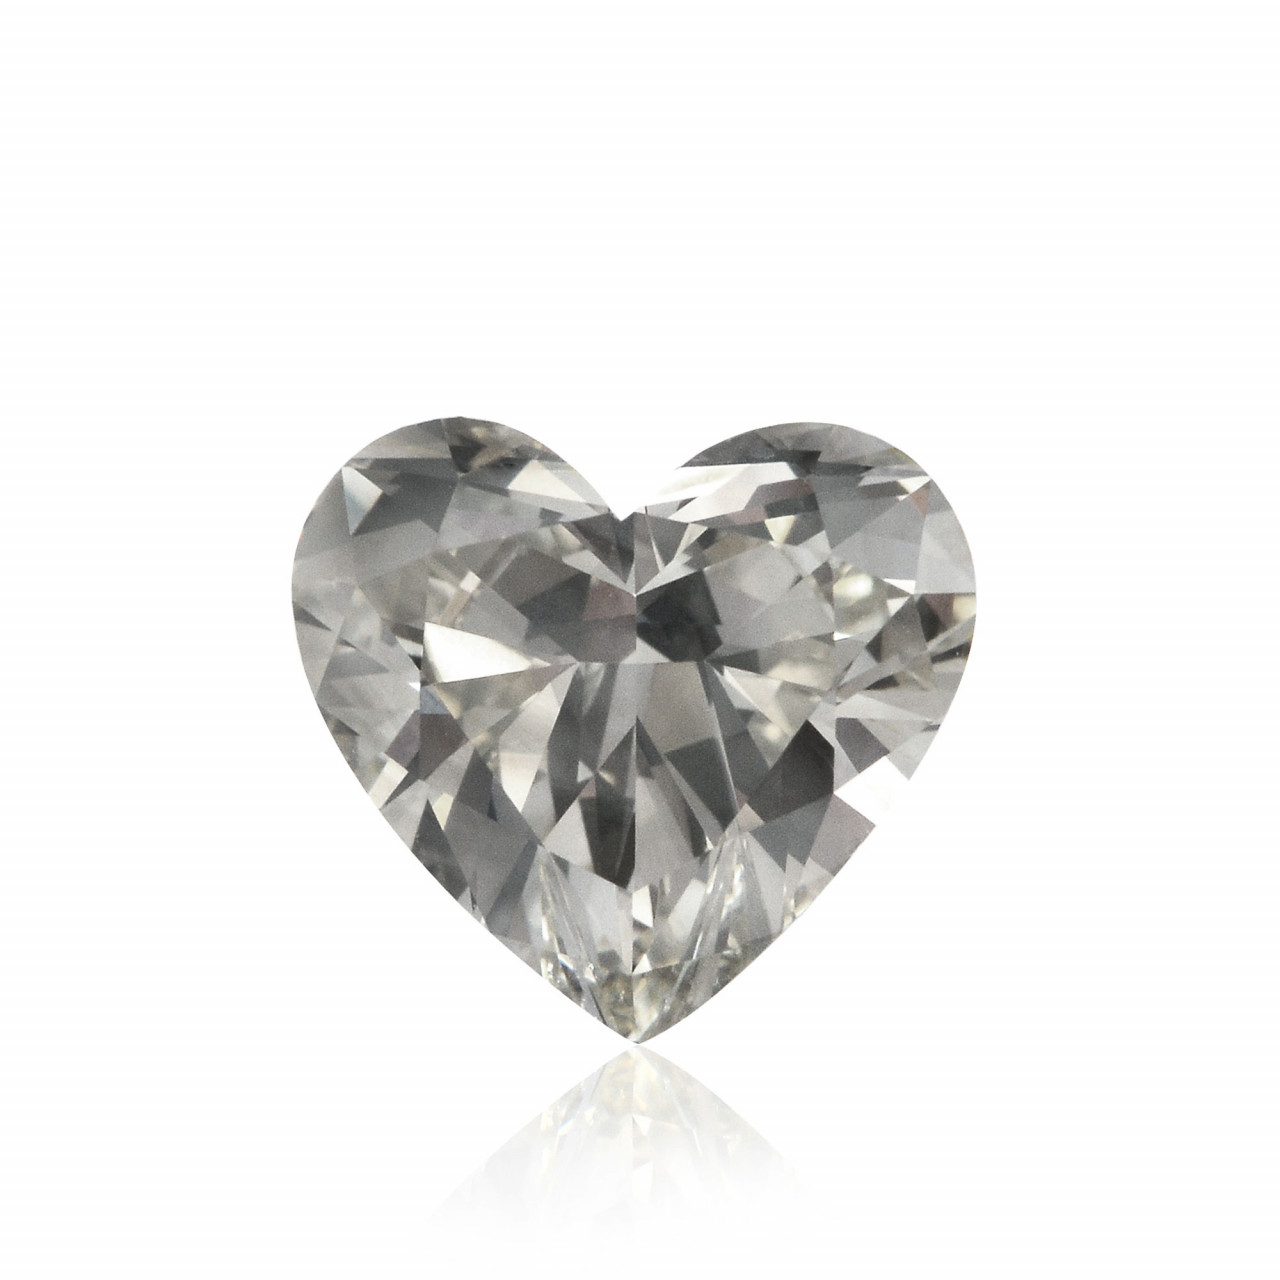 2.01 carat, Fancy Light Gray Diamond, Heart Shape, SI2 Clarity ...